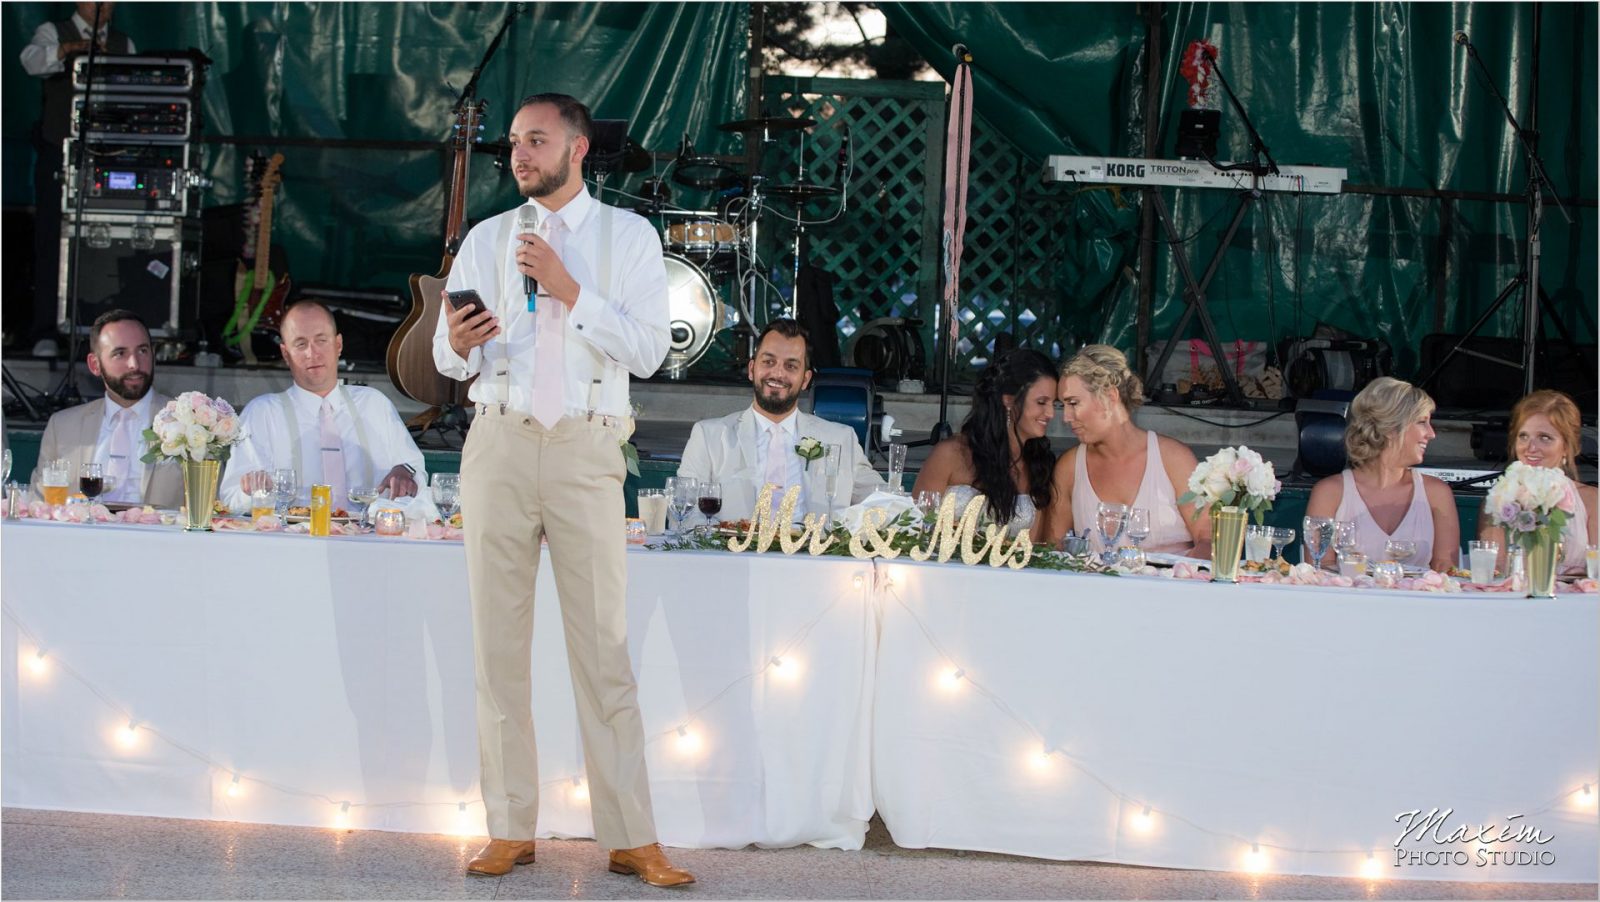 Moonlight Gardens Coney Island Wedding Reception toasts